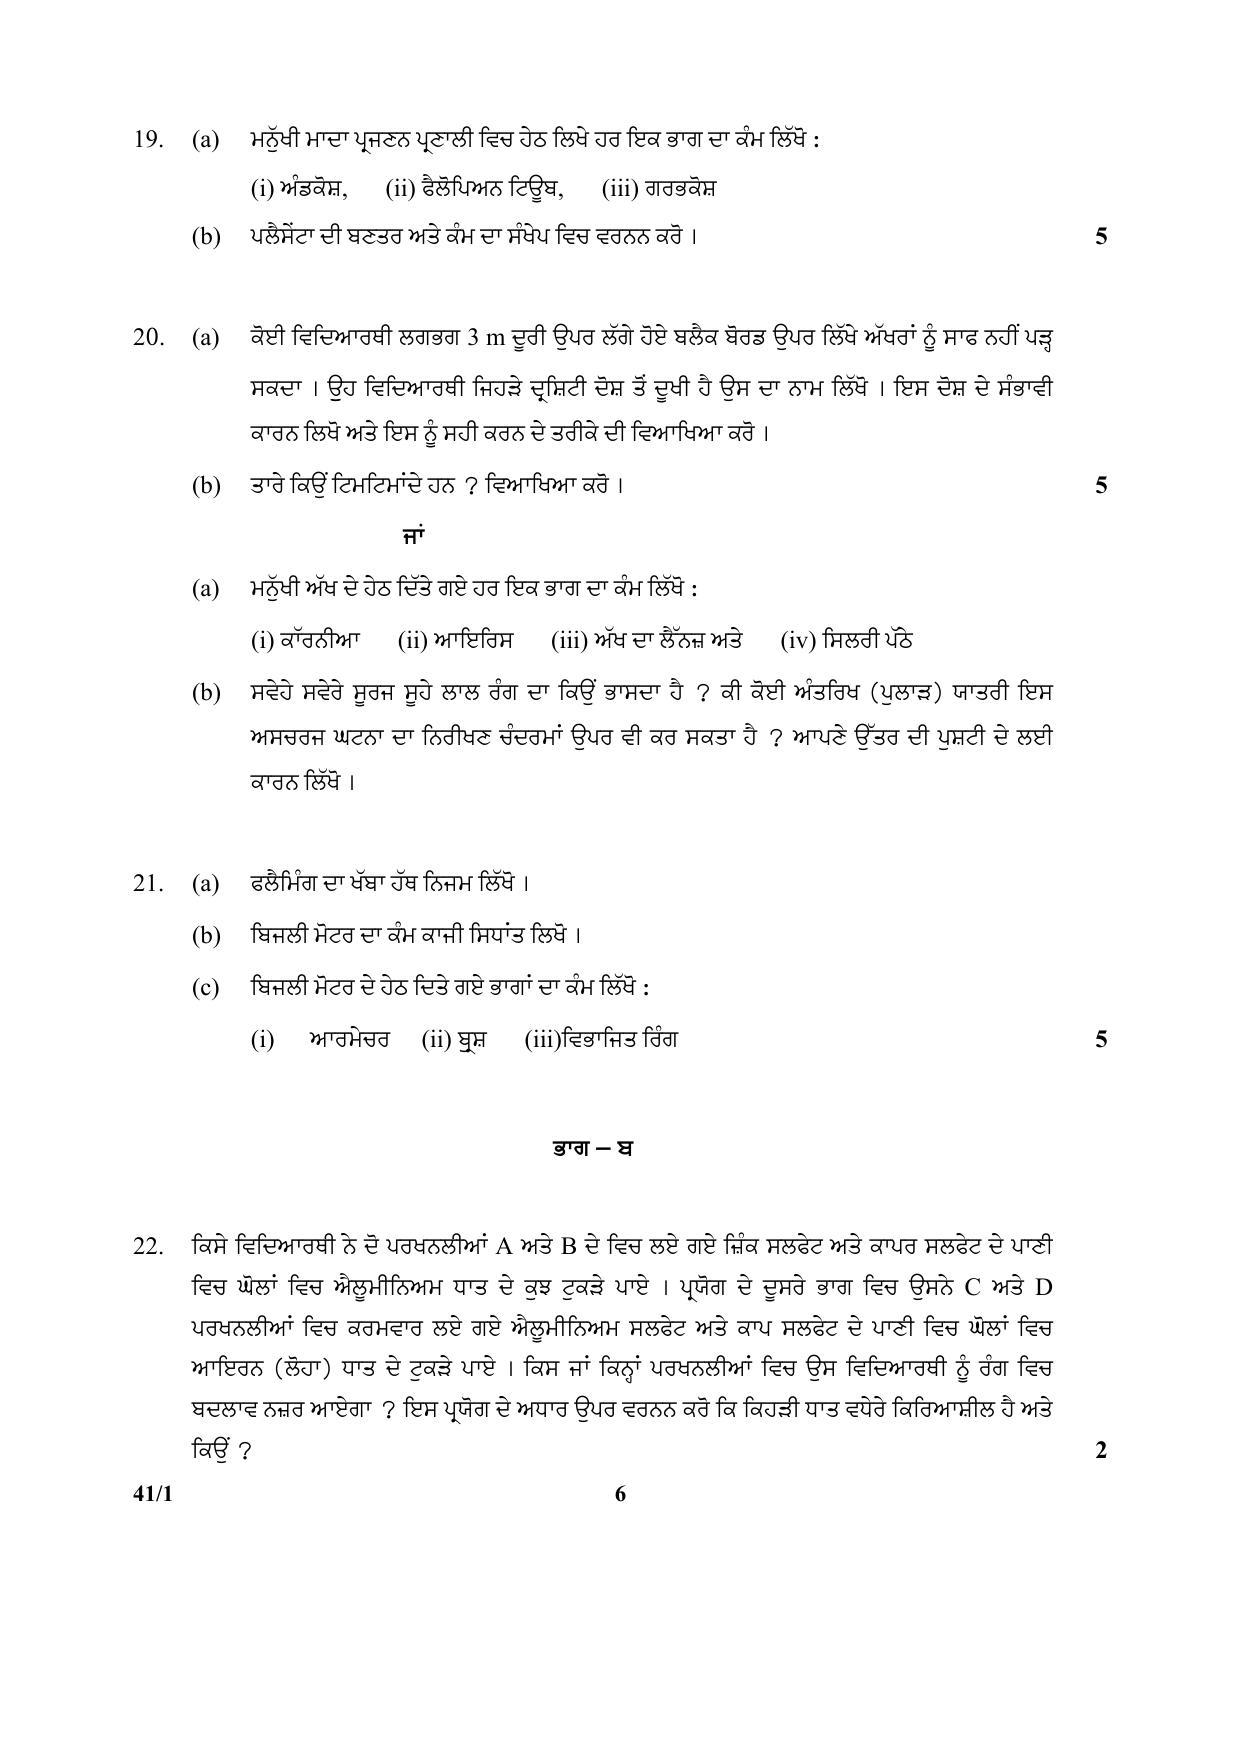 CBSE Class 10 41-1 (Science)_Punjabi 2018 Question Paper - Page 6